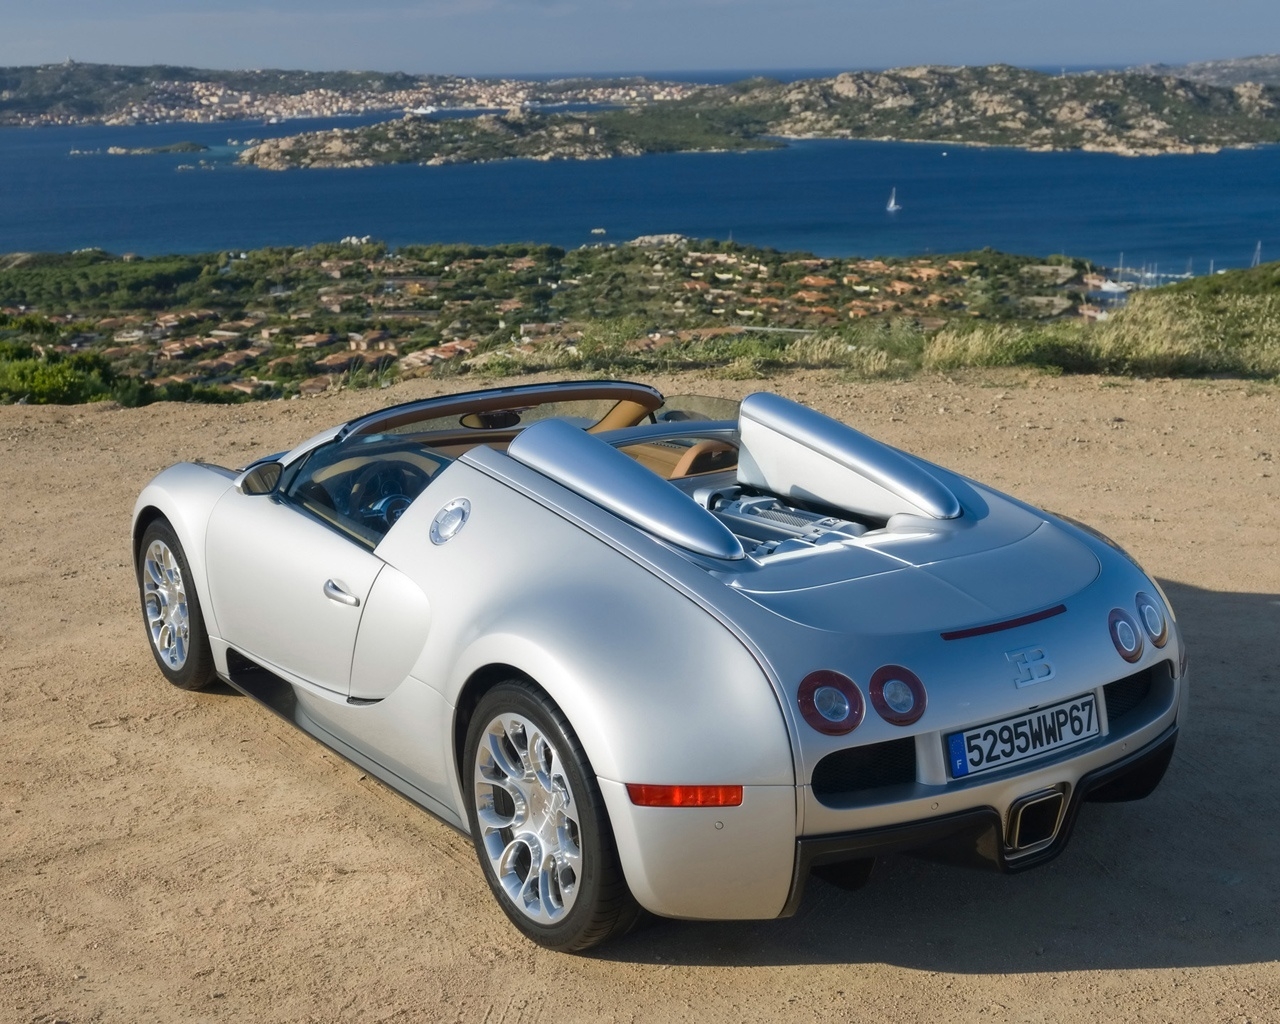 Bugatti Veyron 16.4 Grand Sport in Sardinia 2010 - Rear Angle for 1280 x 1024 resolution